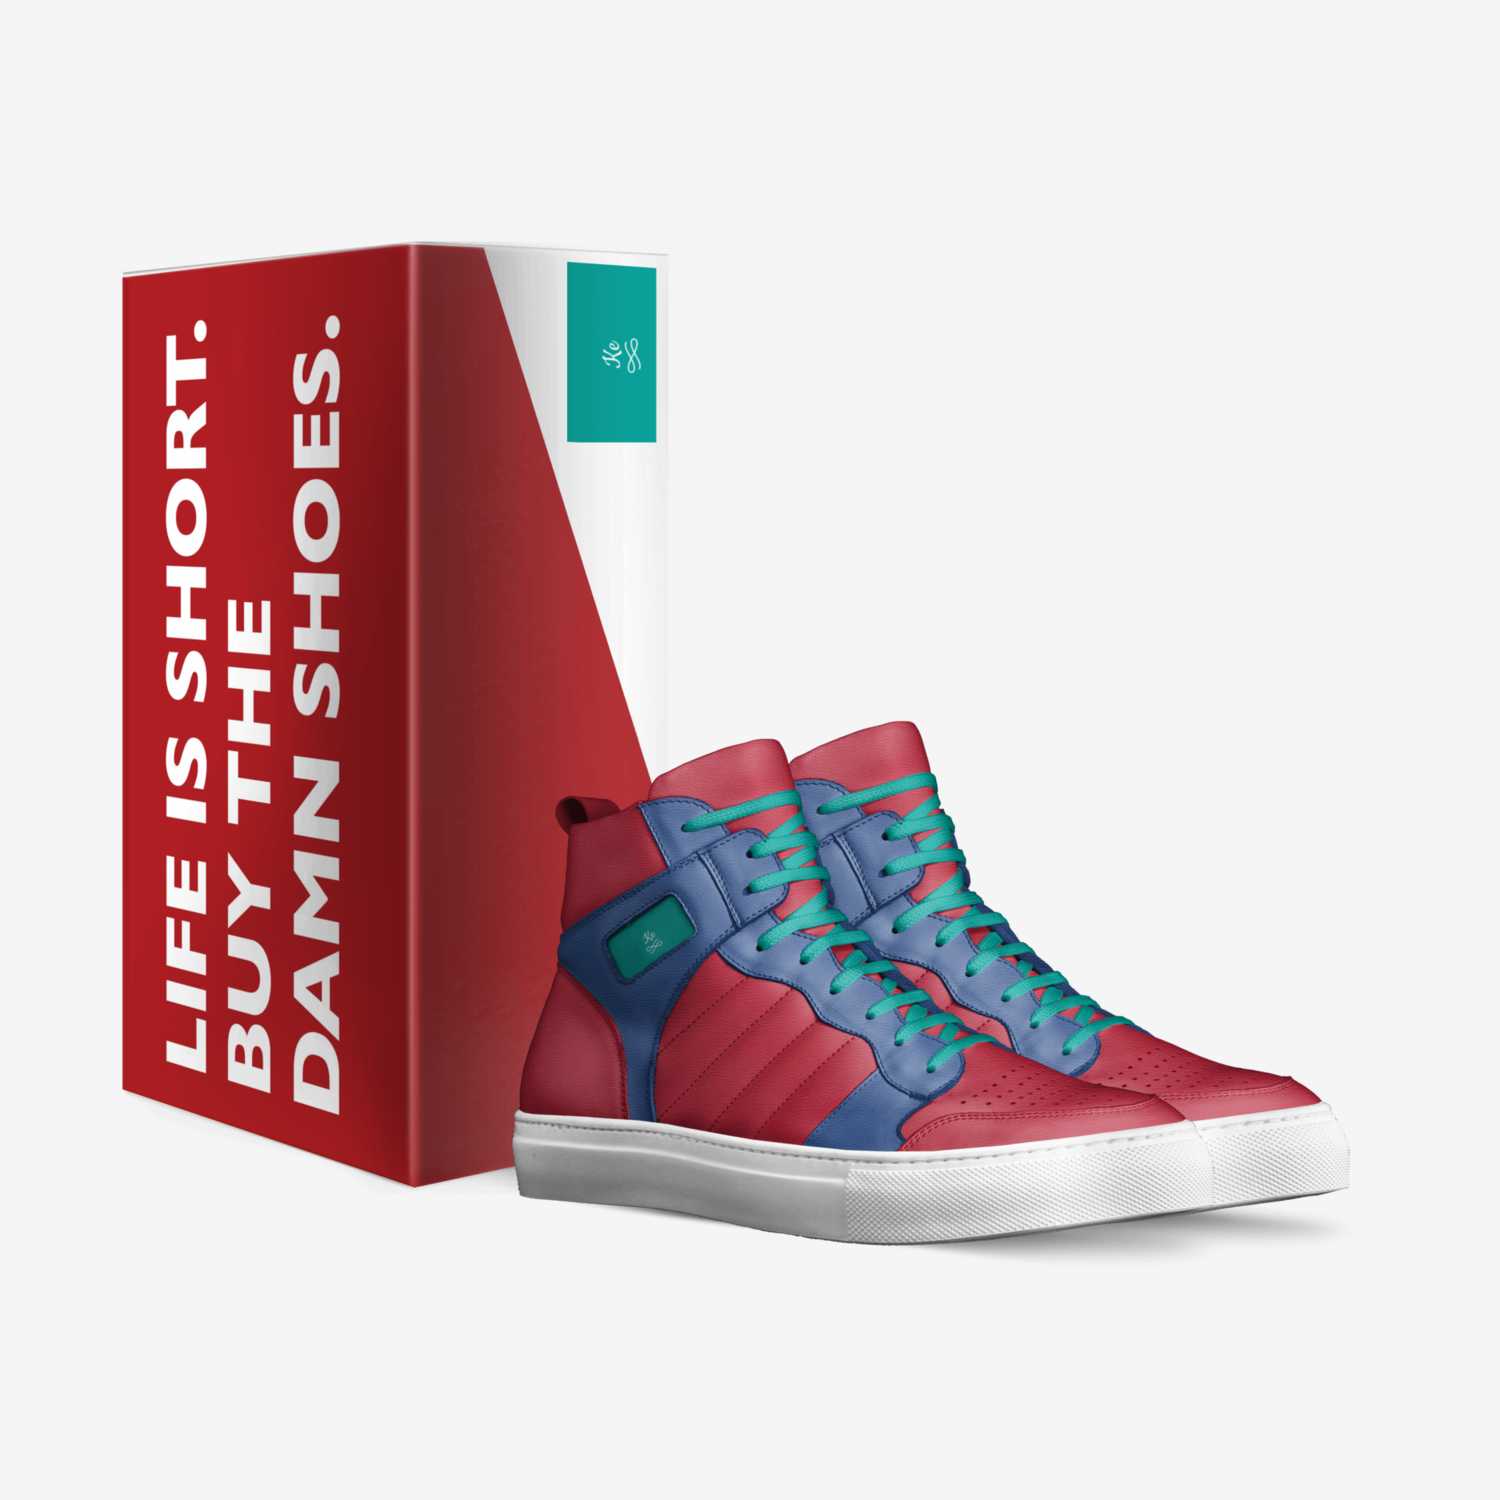 Ke custom made in Italy shoes by Kobe Jeffcoat | Box view